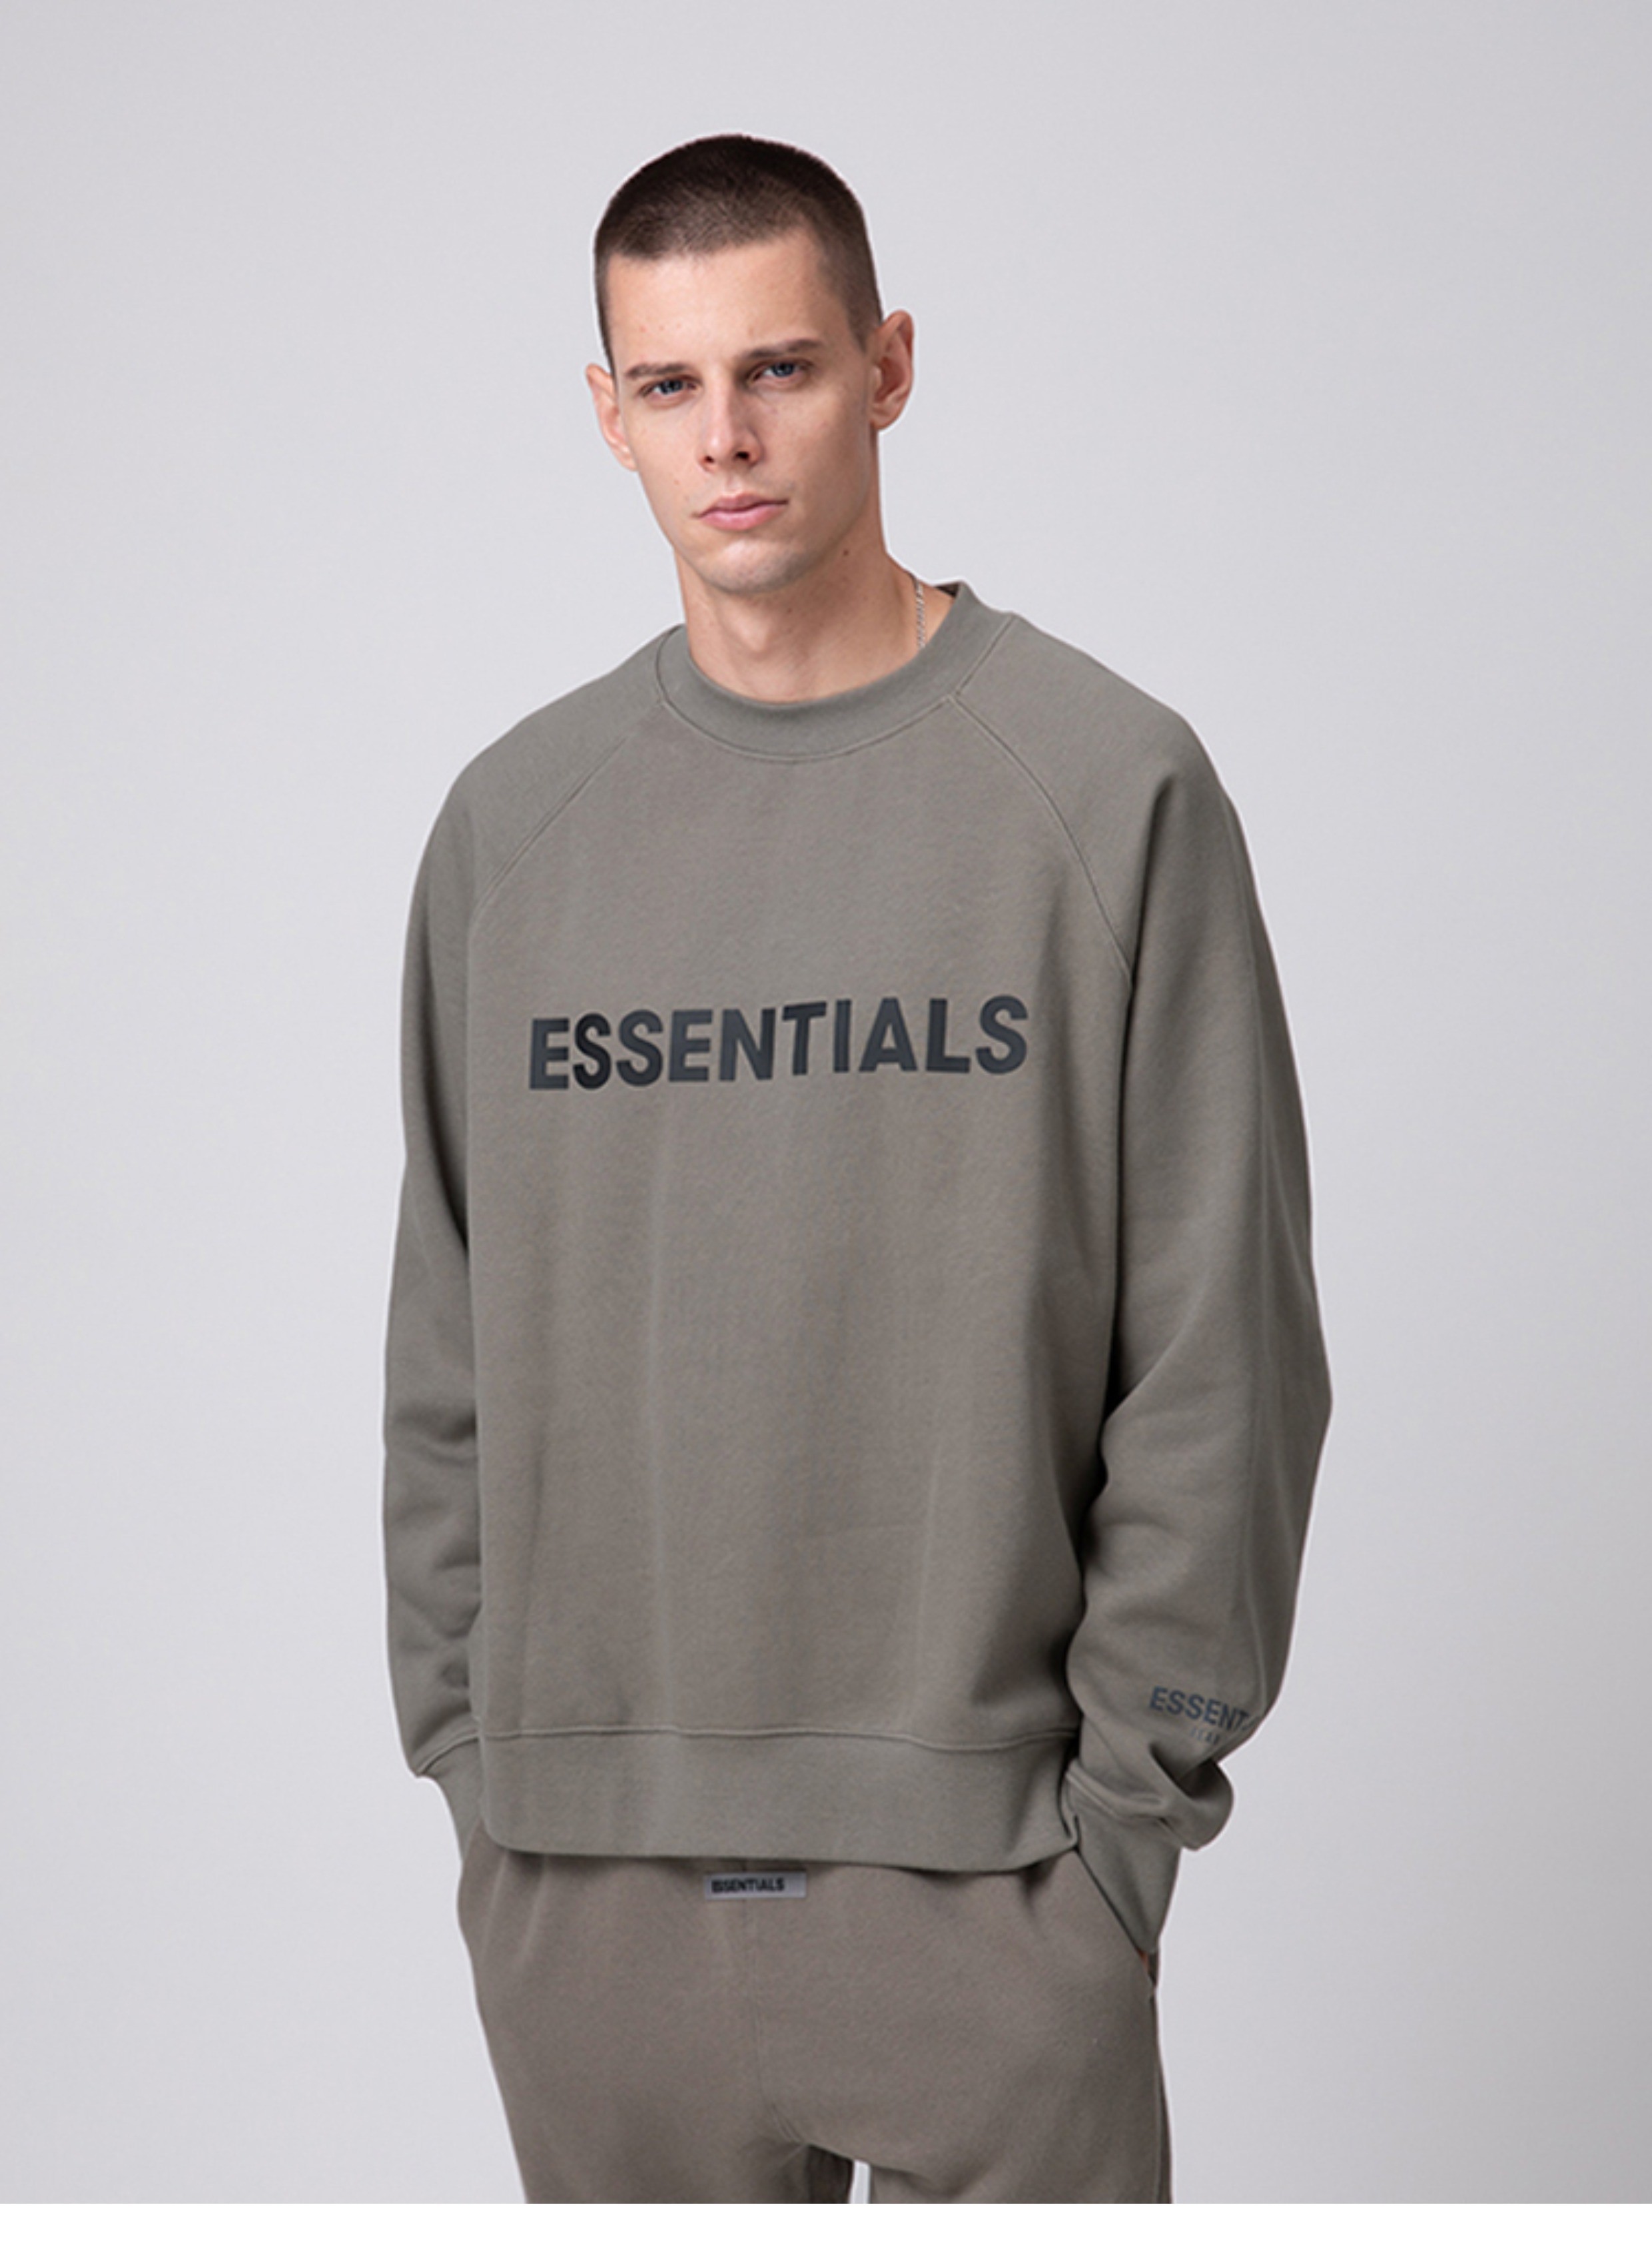 ESSENTIALS Sweatshirts For Men And Women